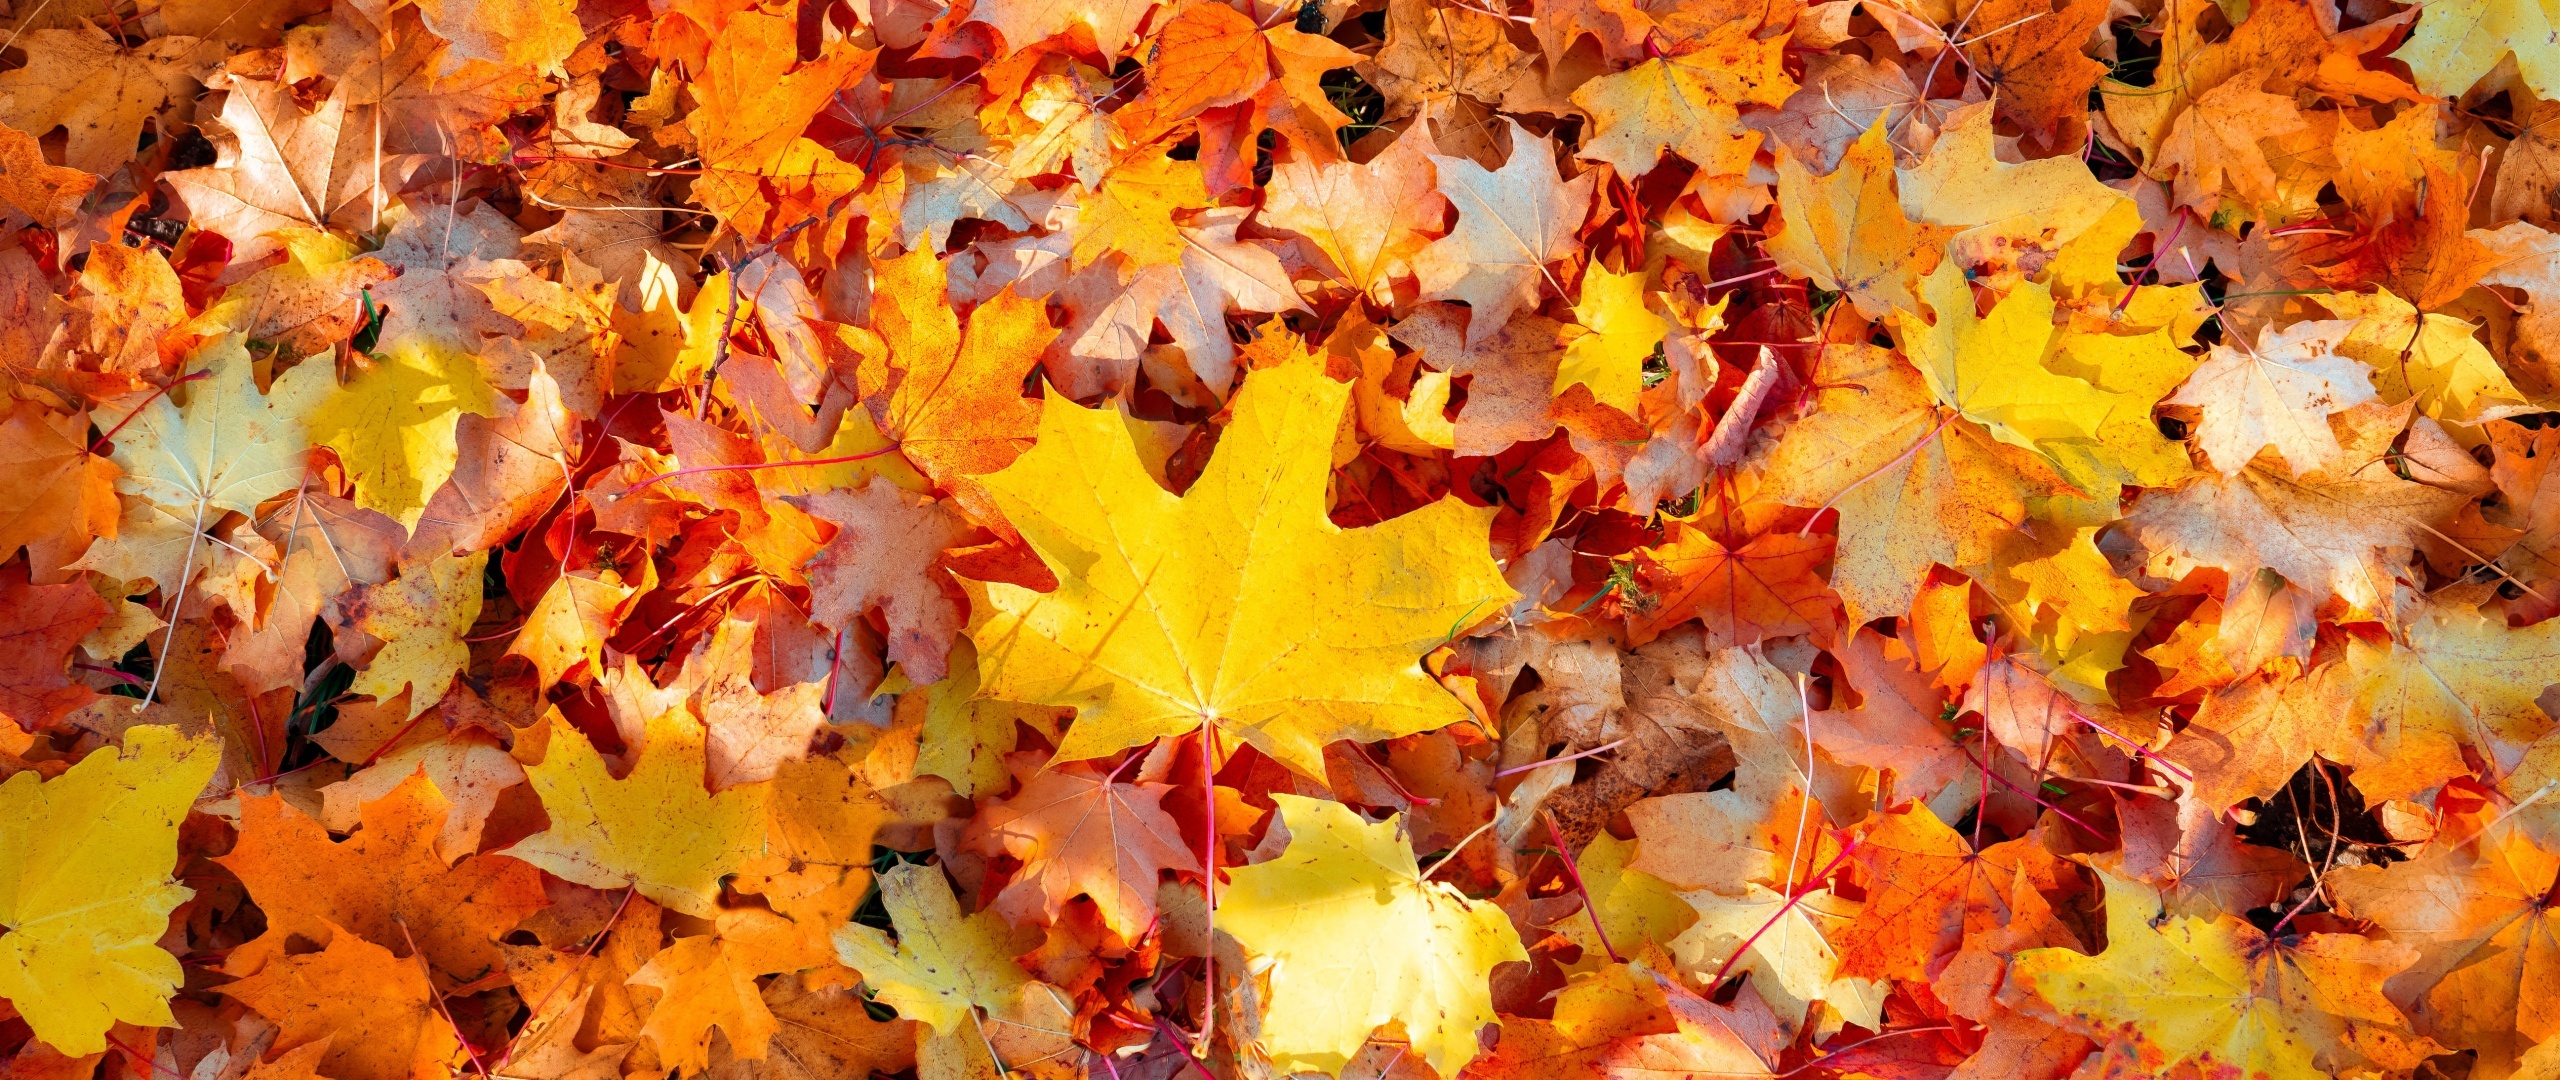 Maple autumn leaves, Nature's palette, Vibrant hues, Fall's magic, 2560x1080 Dual Screen Desktop